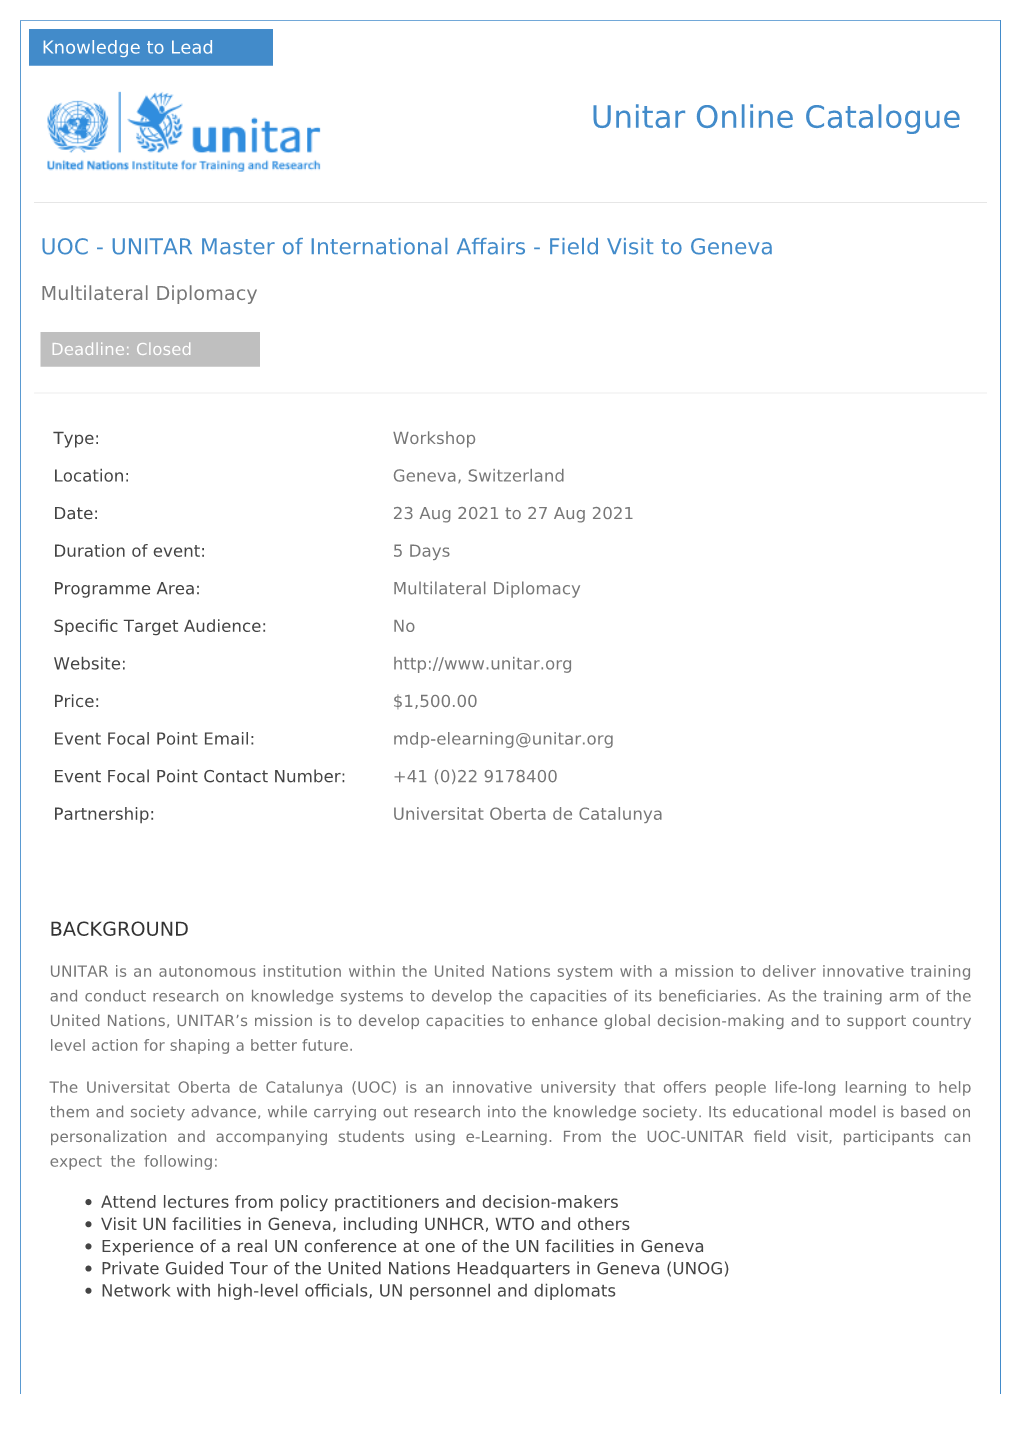 UOC - UNITAR Master of International Aﬀairs - Field Visit to Geneva